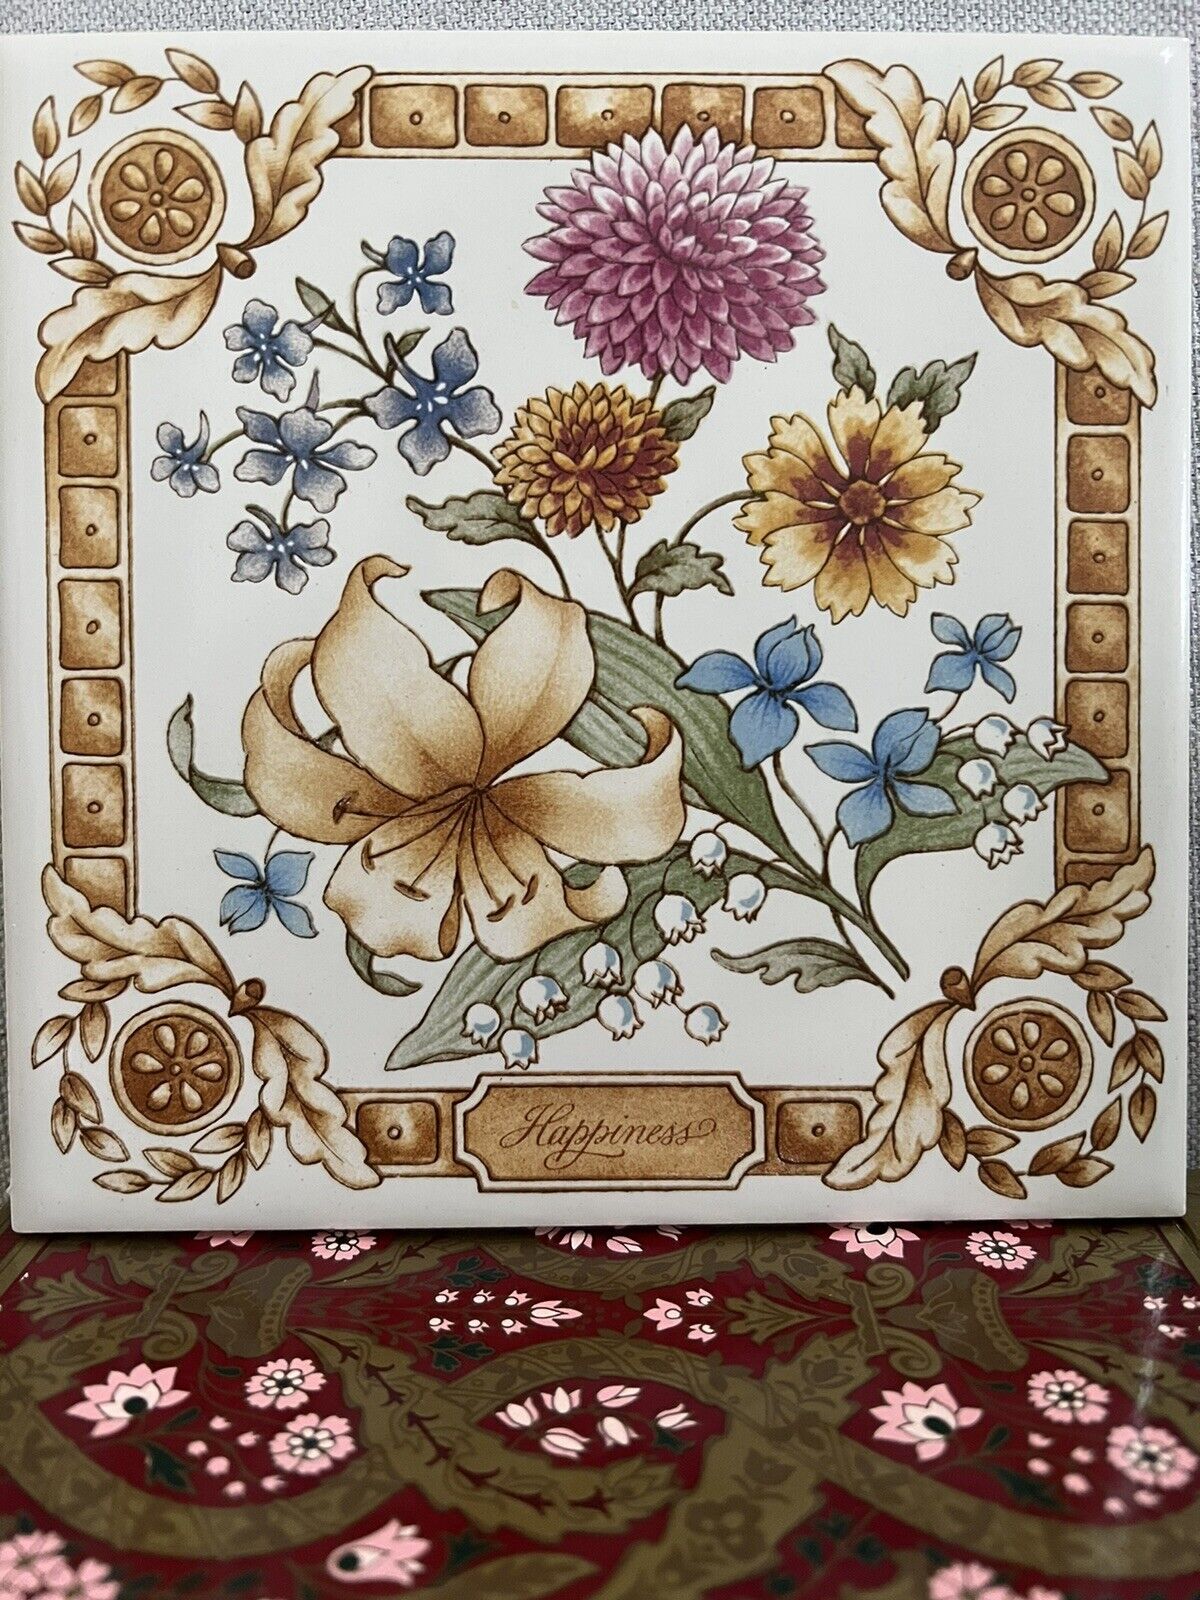 Avon Happiness Flower design Ceramic Tile Original Box 1983 Made in England